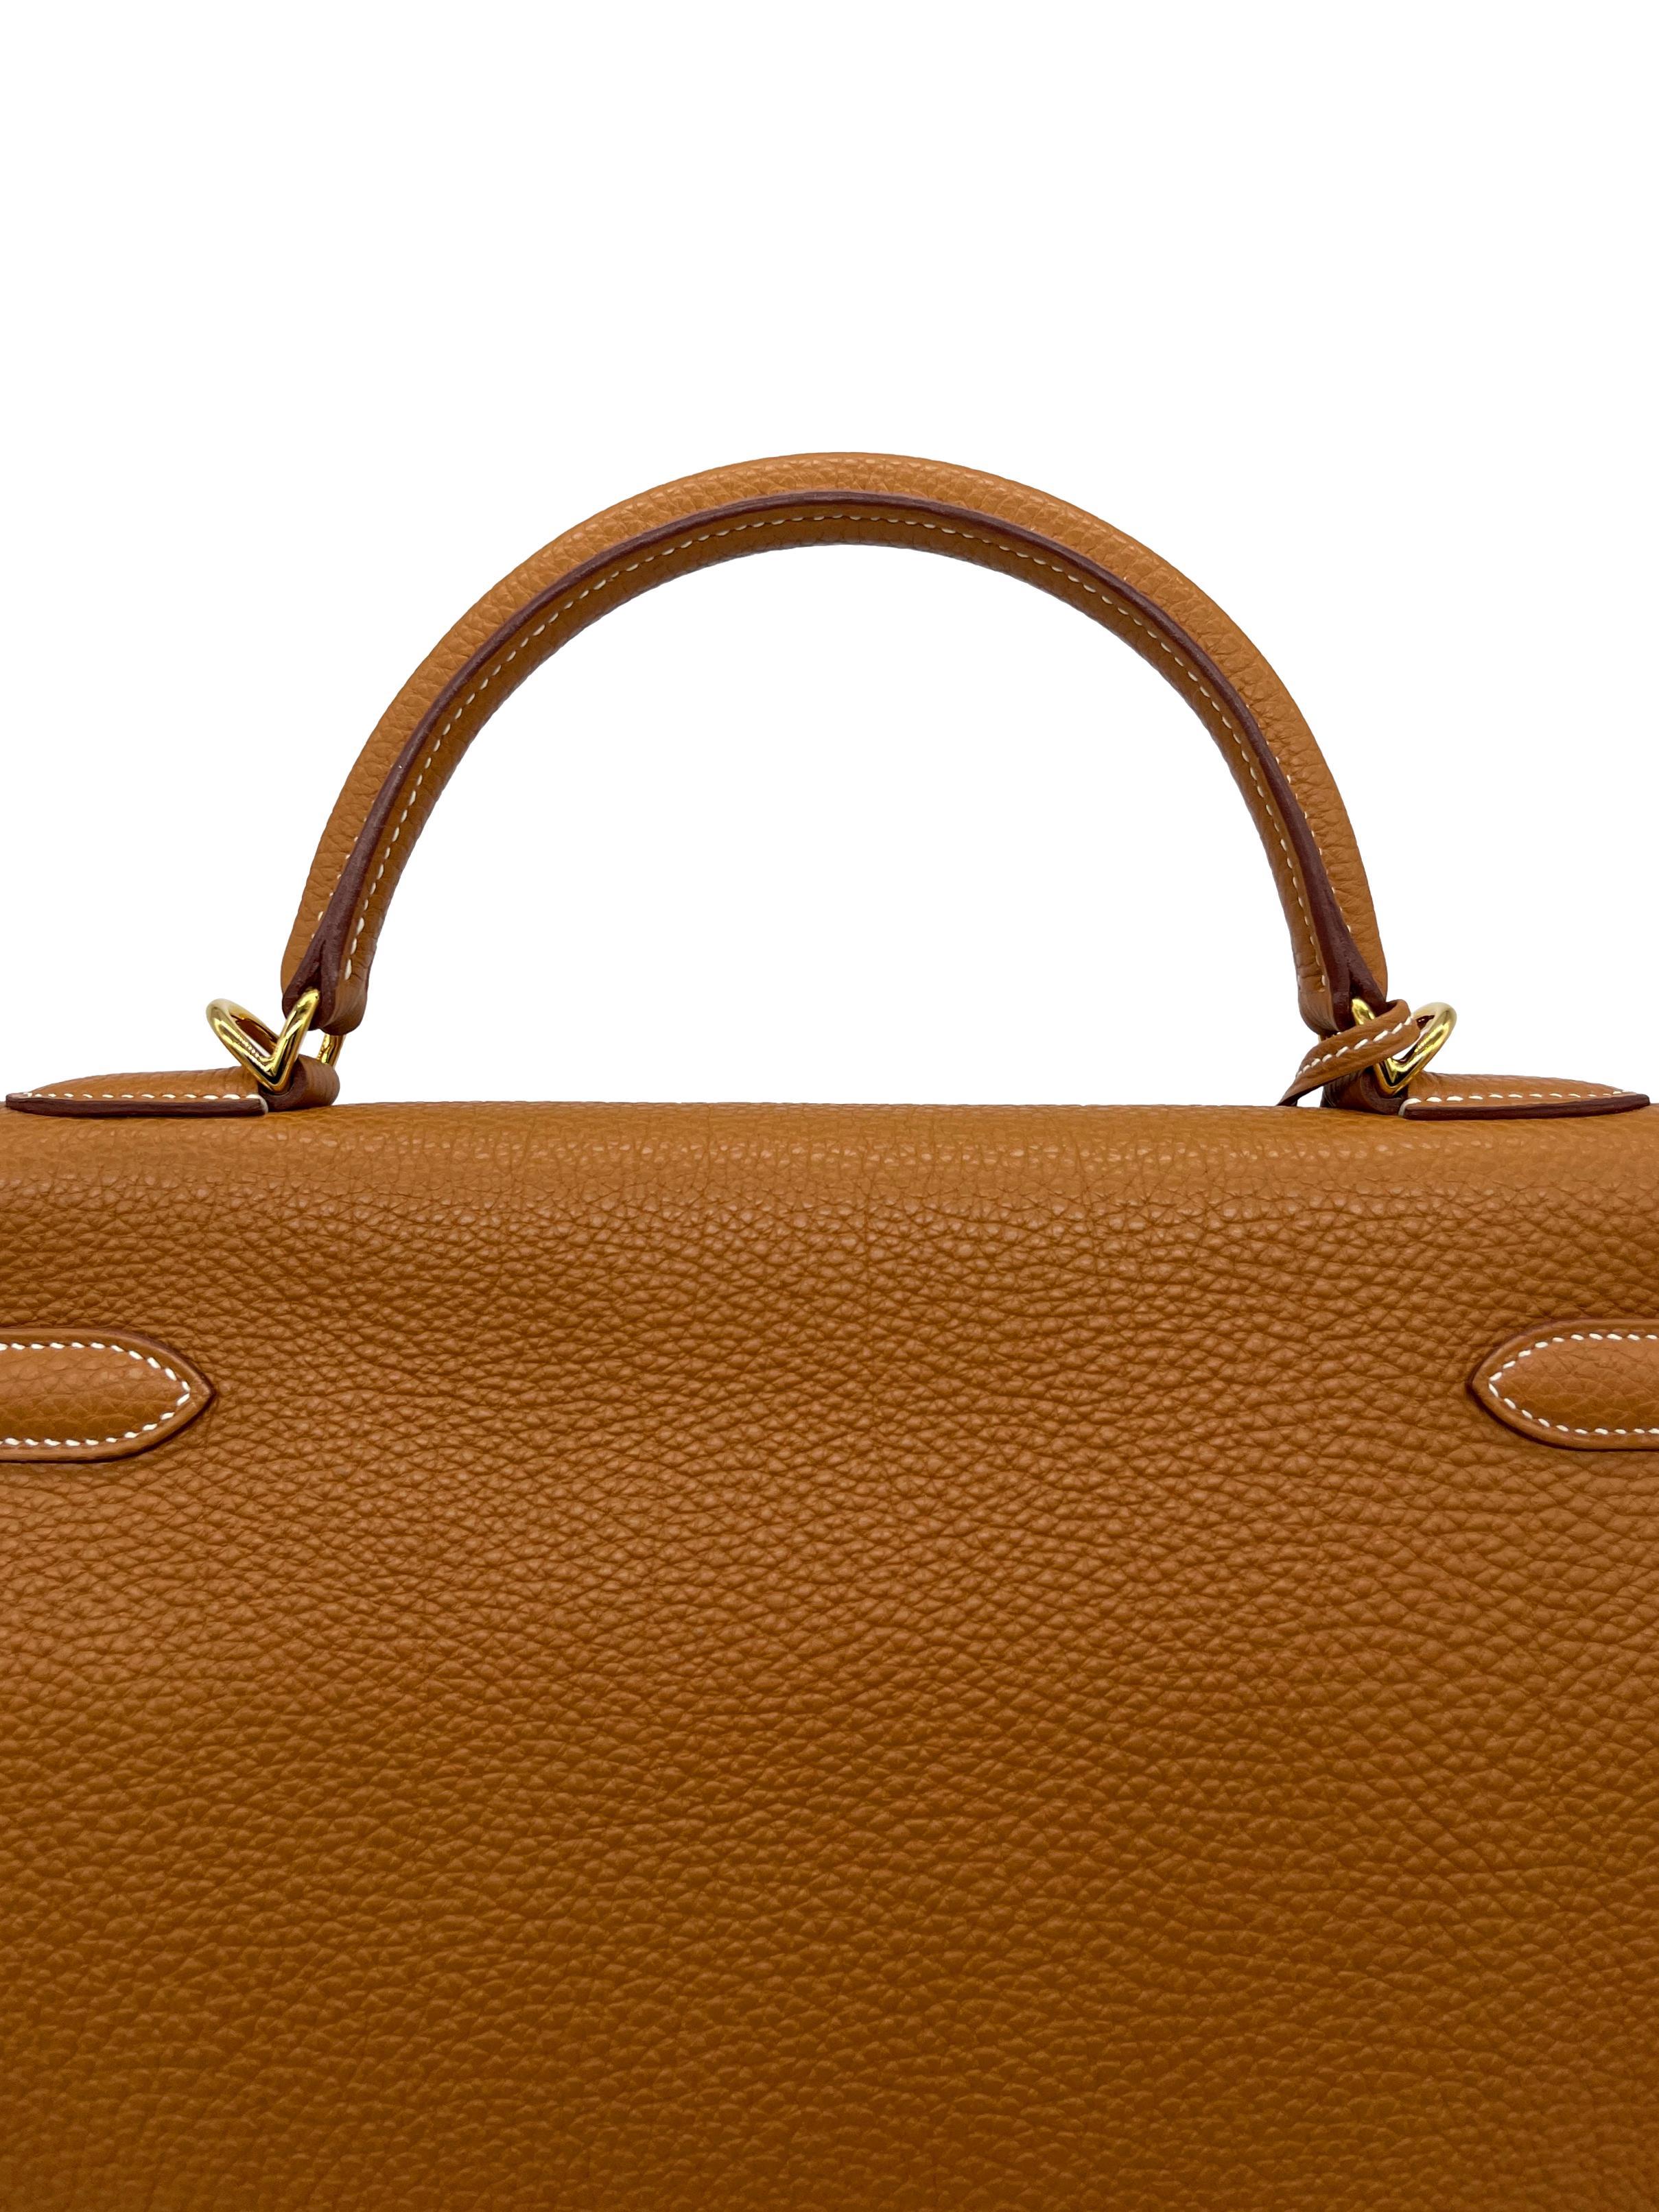 Hermès Natural Clemence Retourne Kelly Handbag with Gold Hardware 32cm, 2007. 12